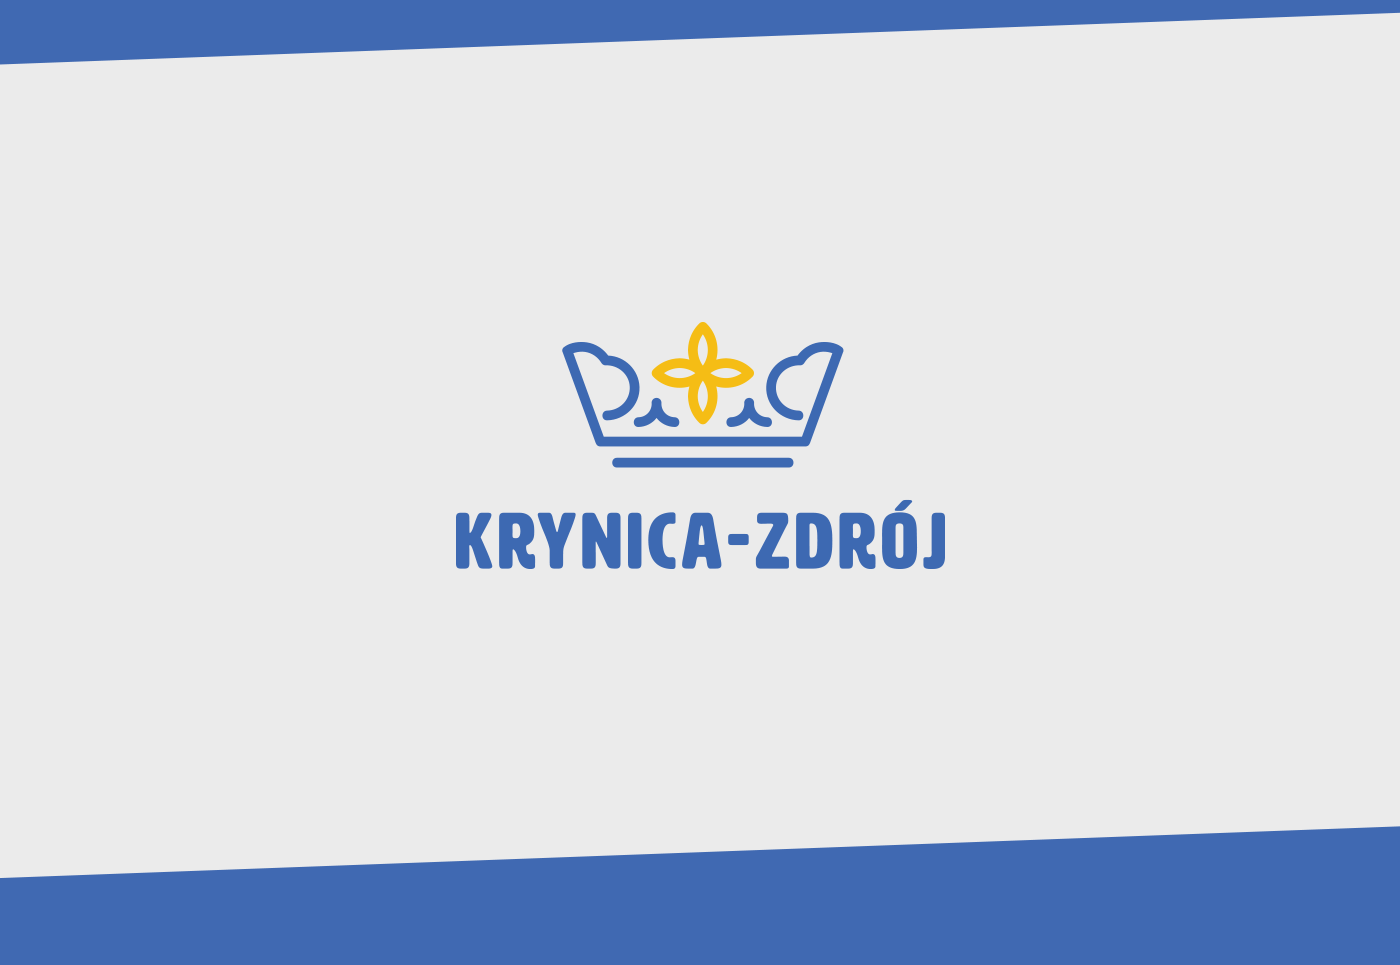 Krynica-Zdrój logo city